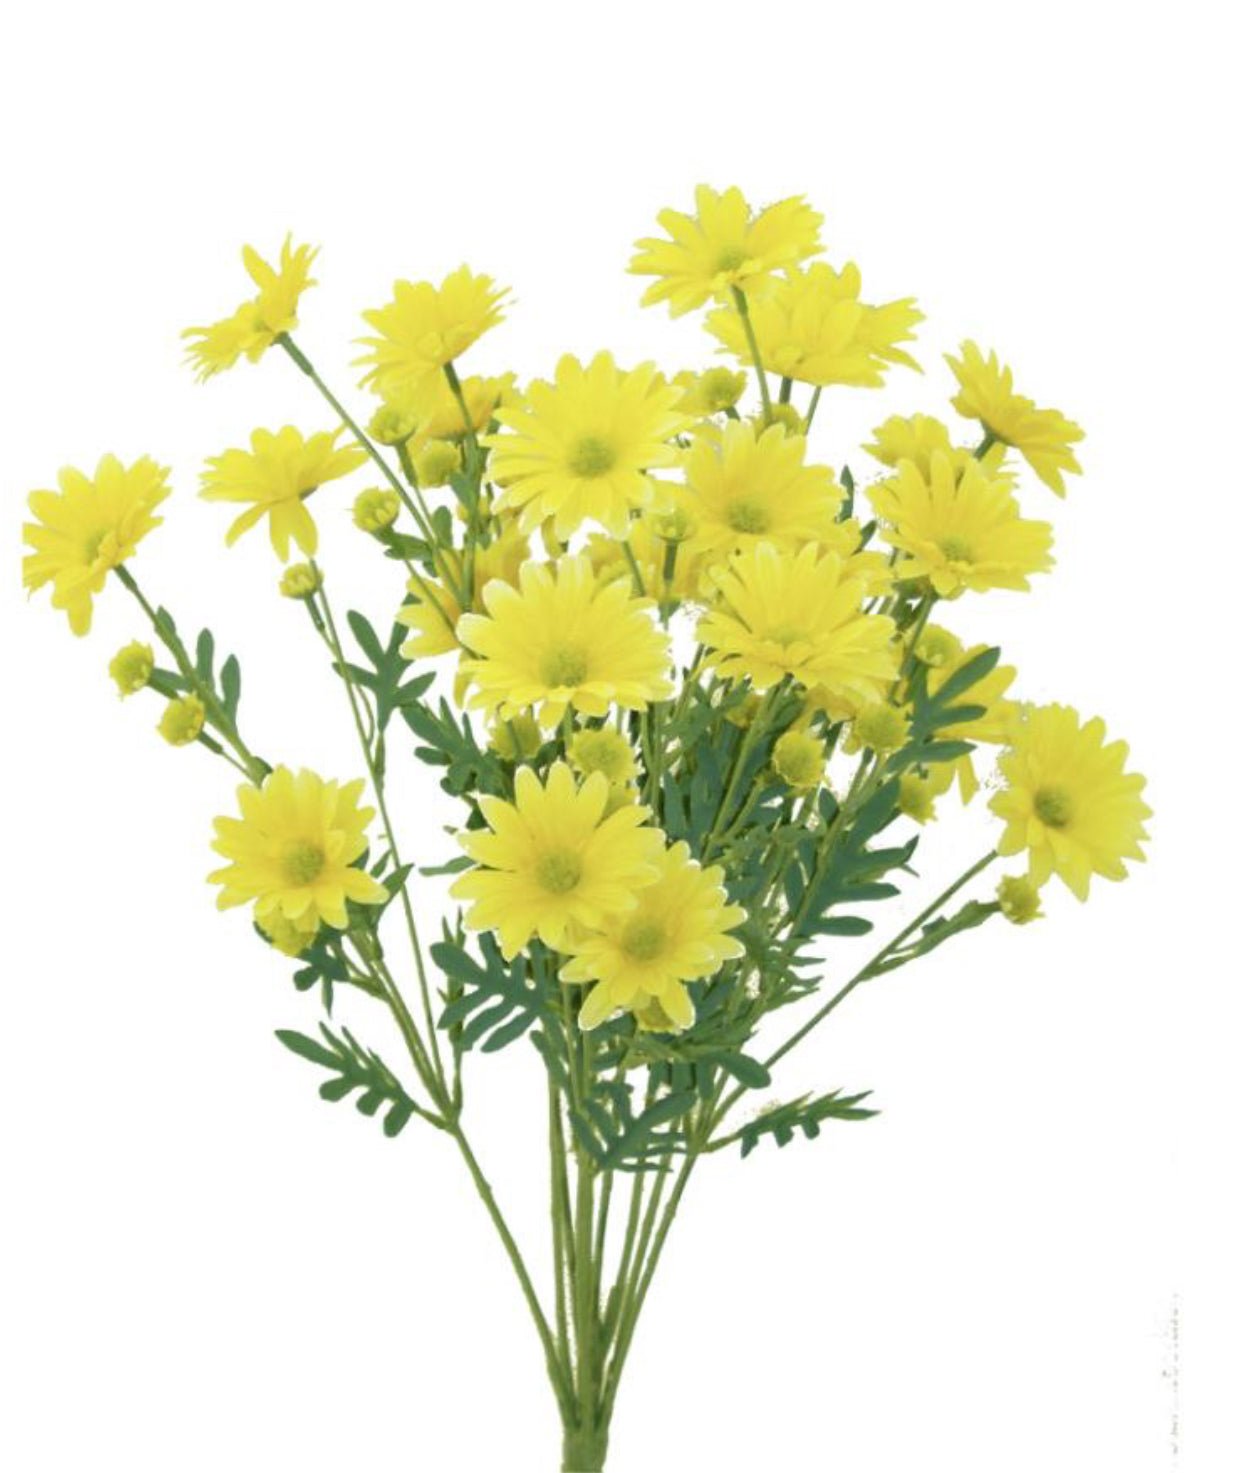 Yellow daisies, Daisy flower bush - Greenery Marketartificial flowers62951yw